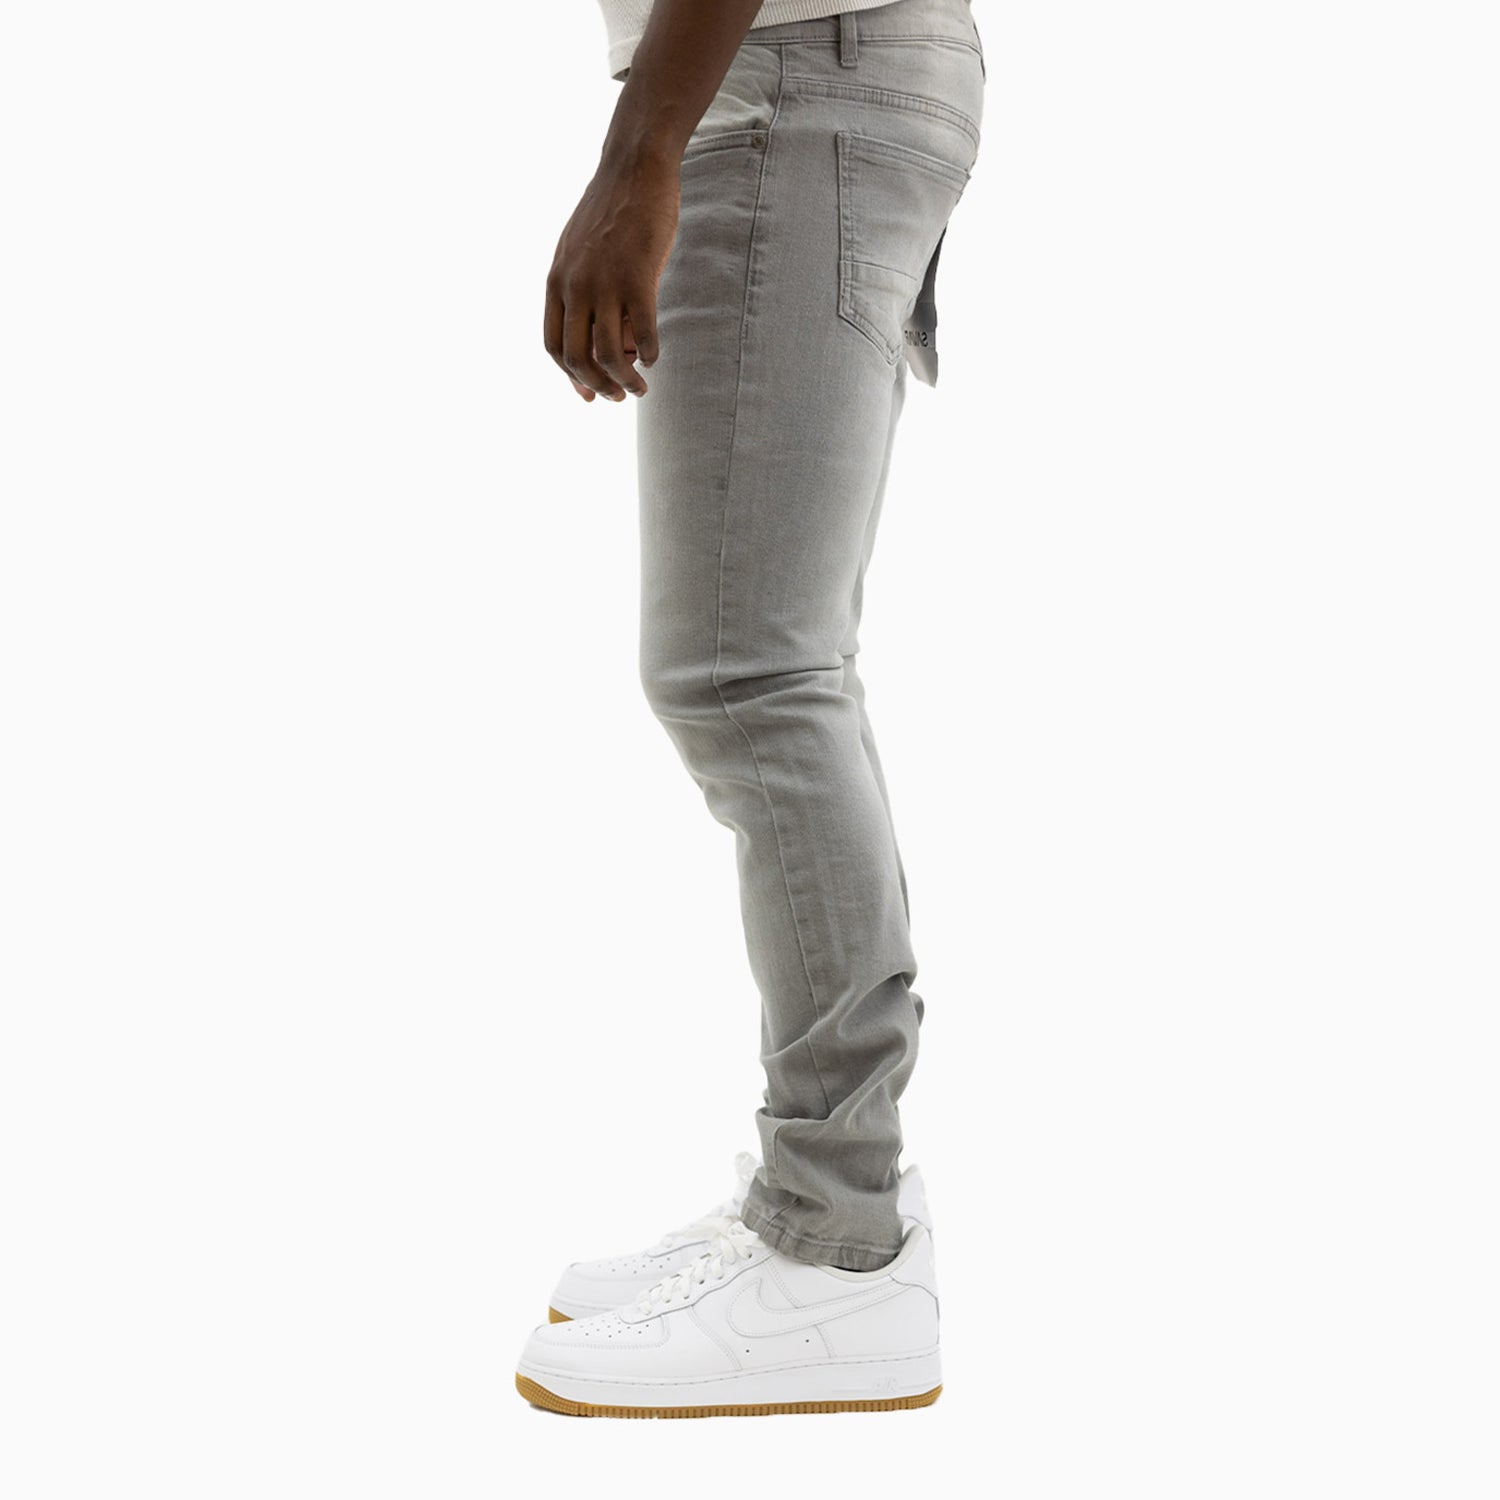 mens-savar-light-grey-slim-denim-jeans-pant-sjb0240-grey